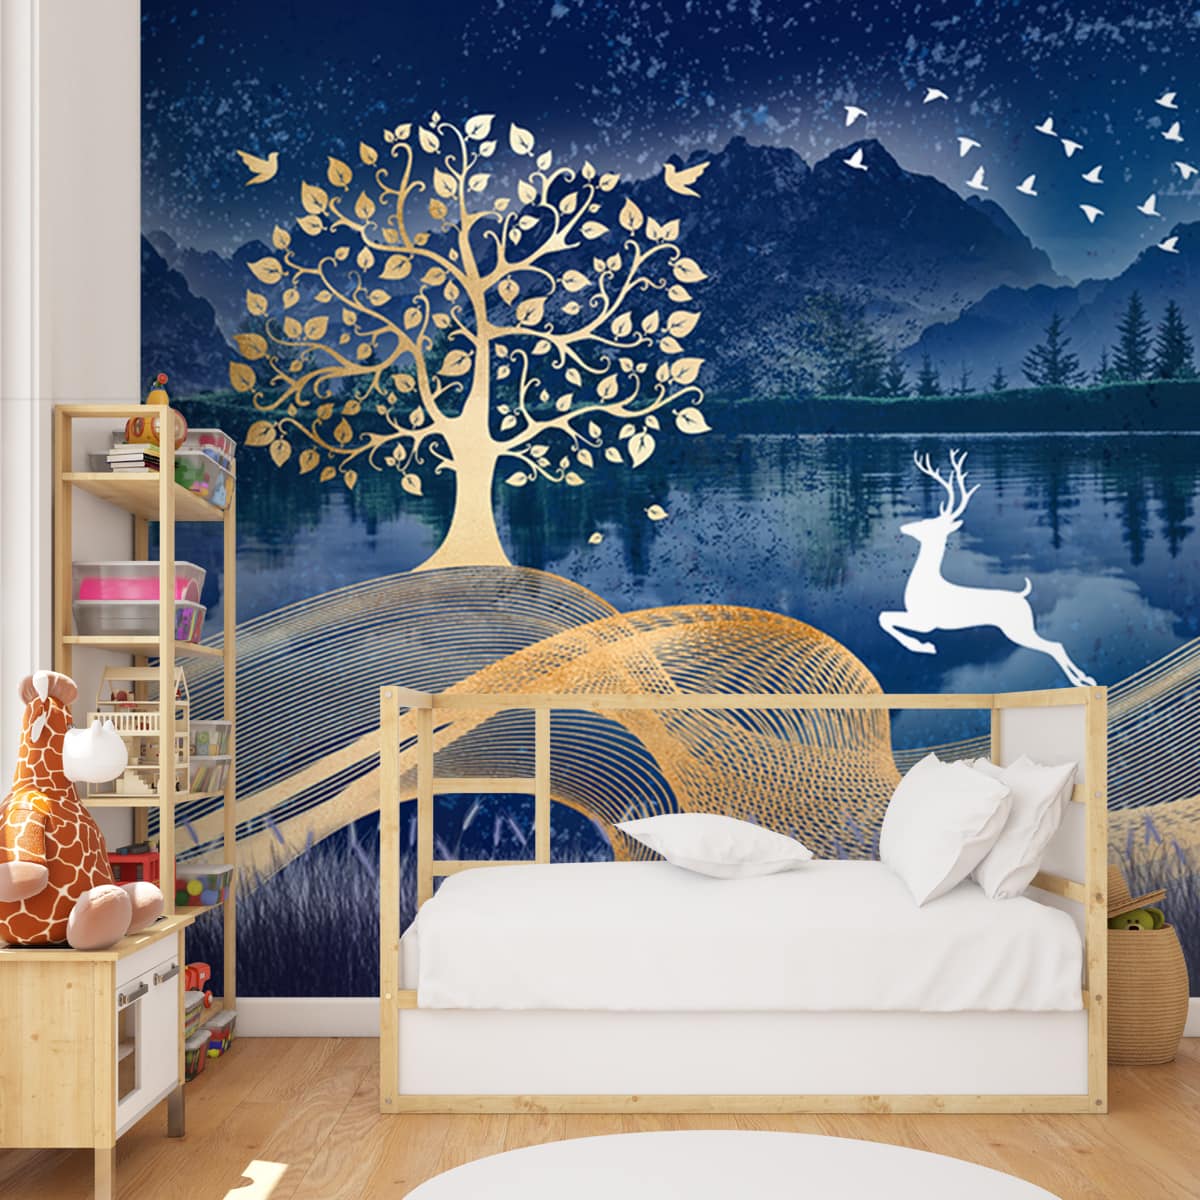 Golden Bodhi Tree Wallpaper with White Deer, Customised